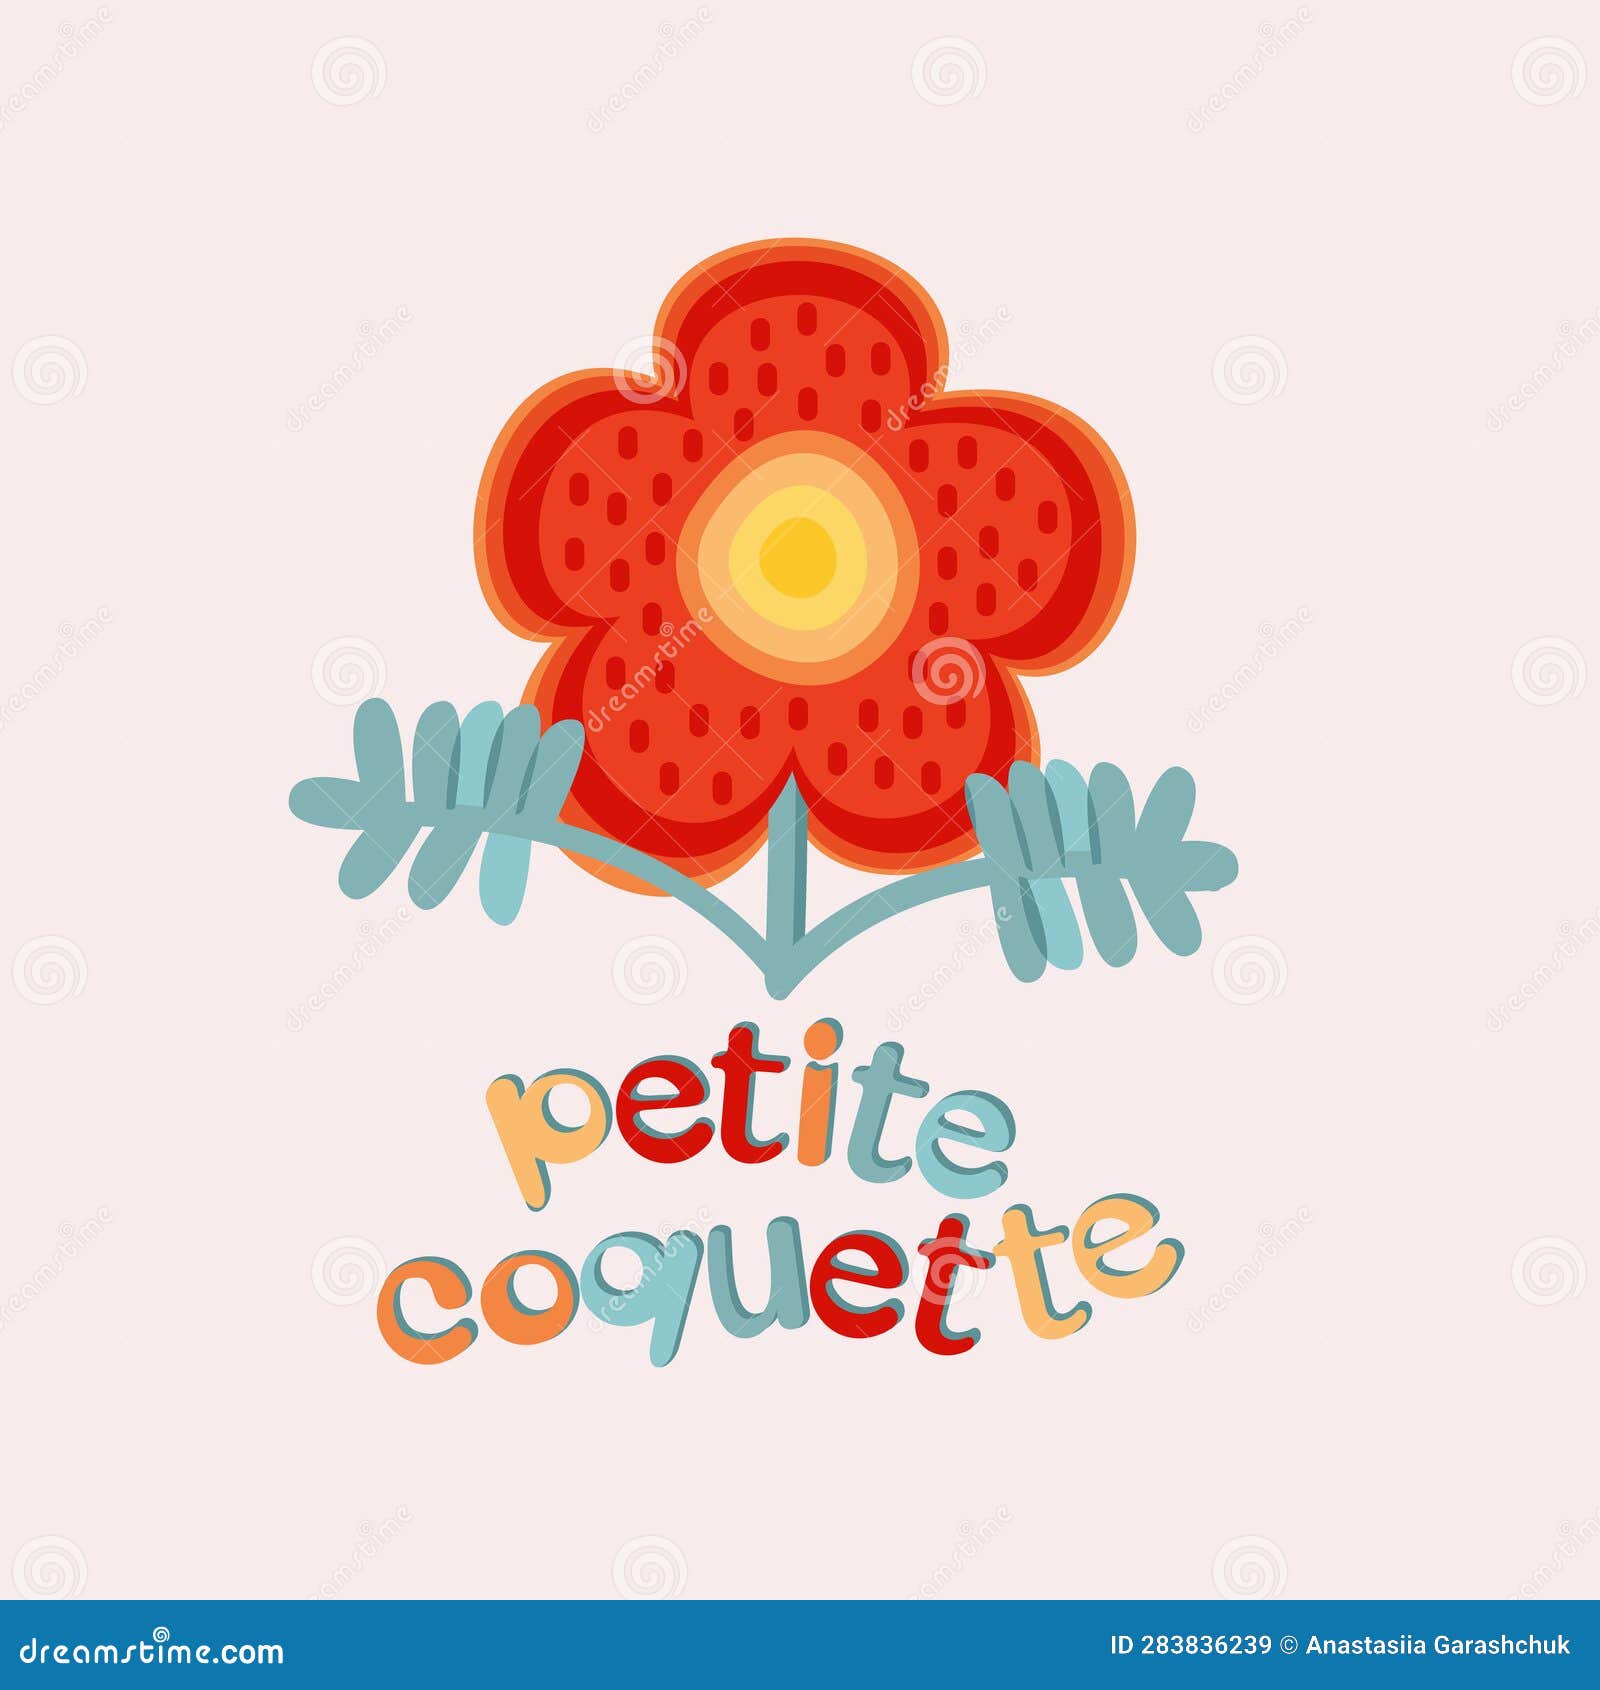 Petite Coquette